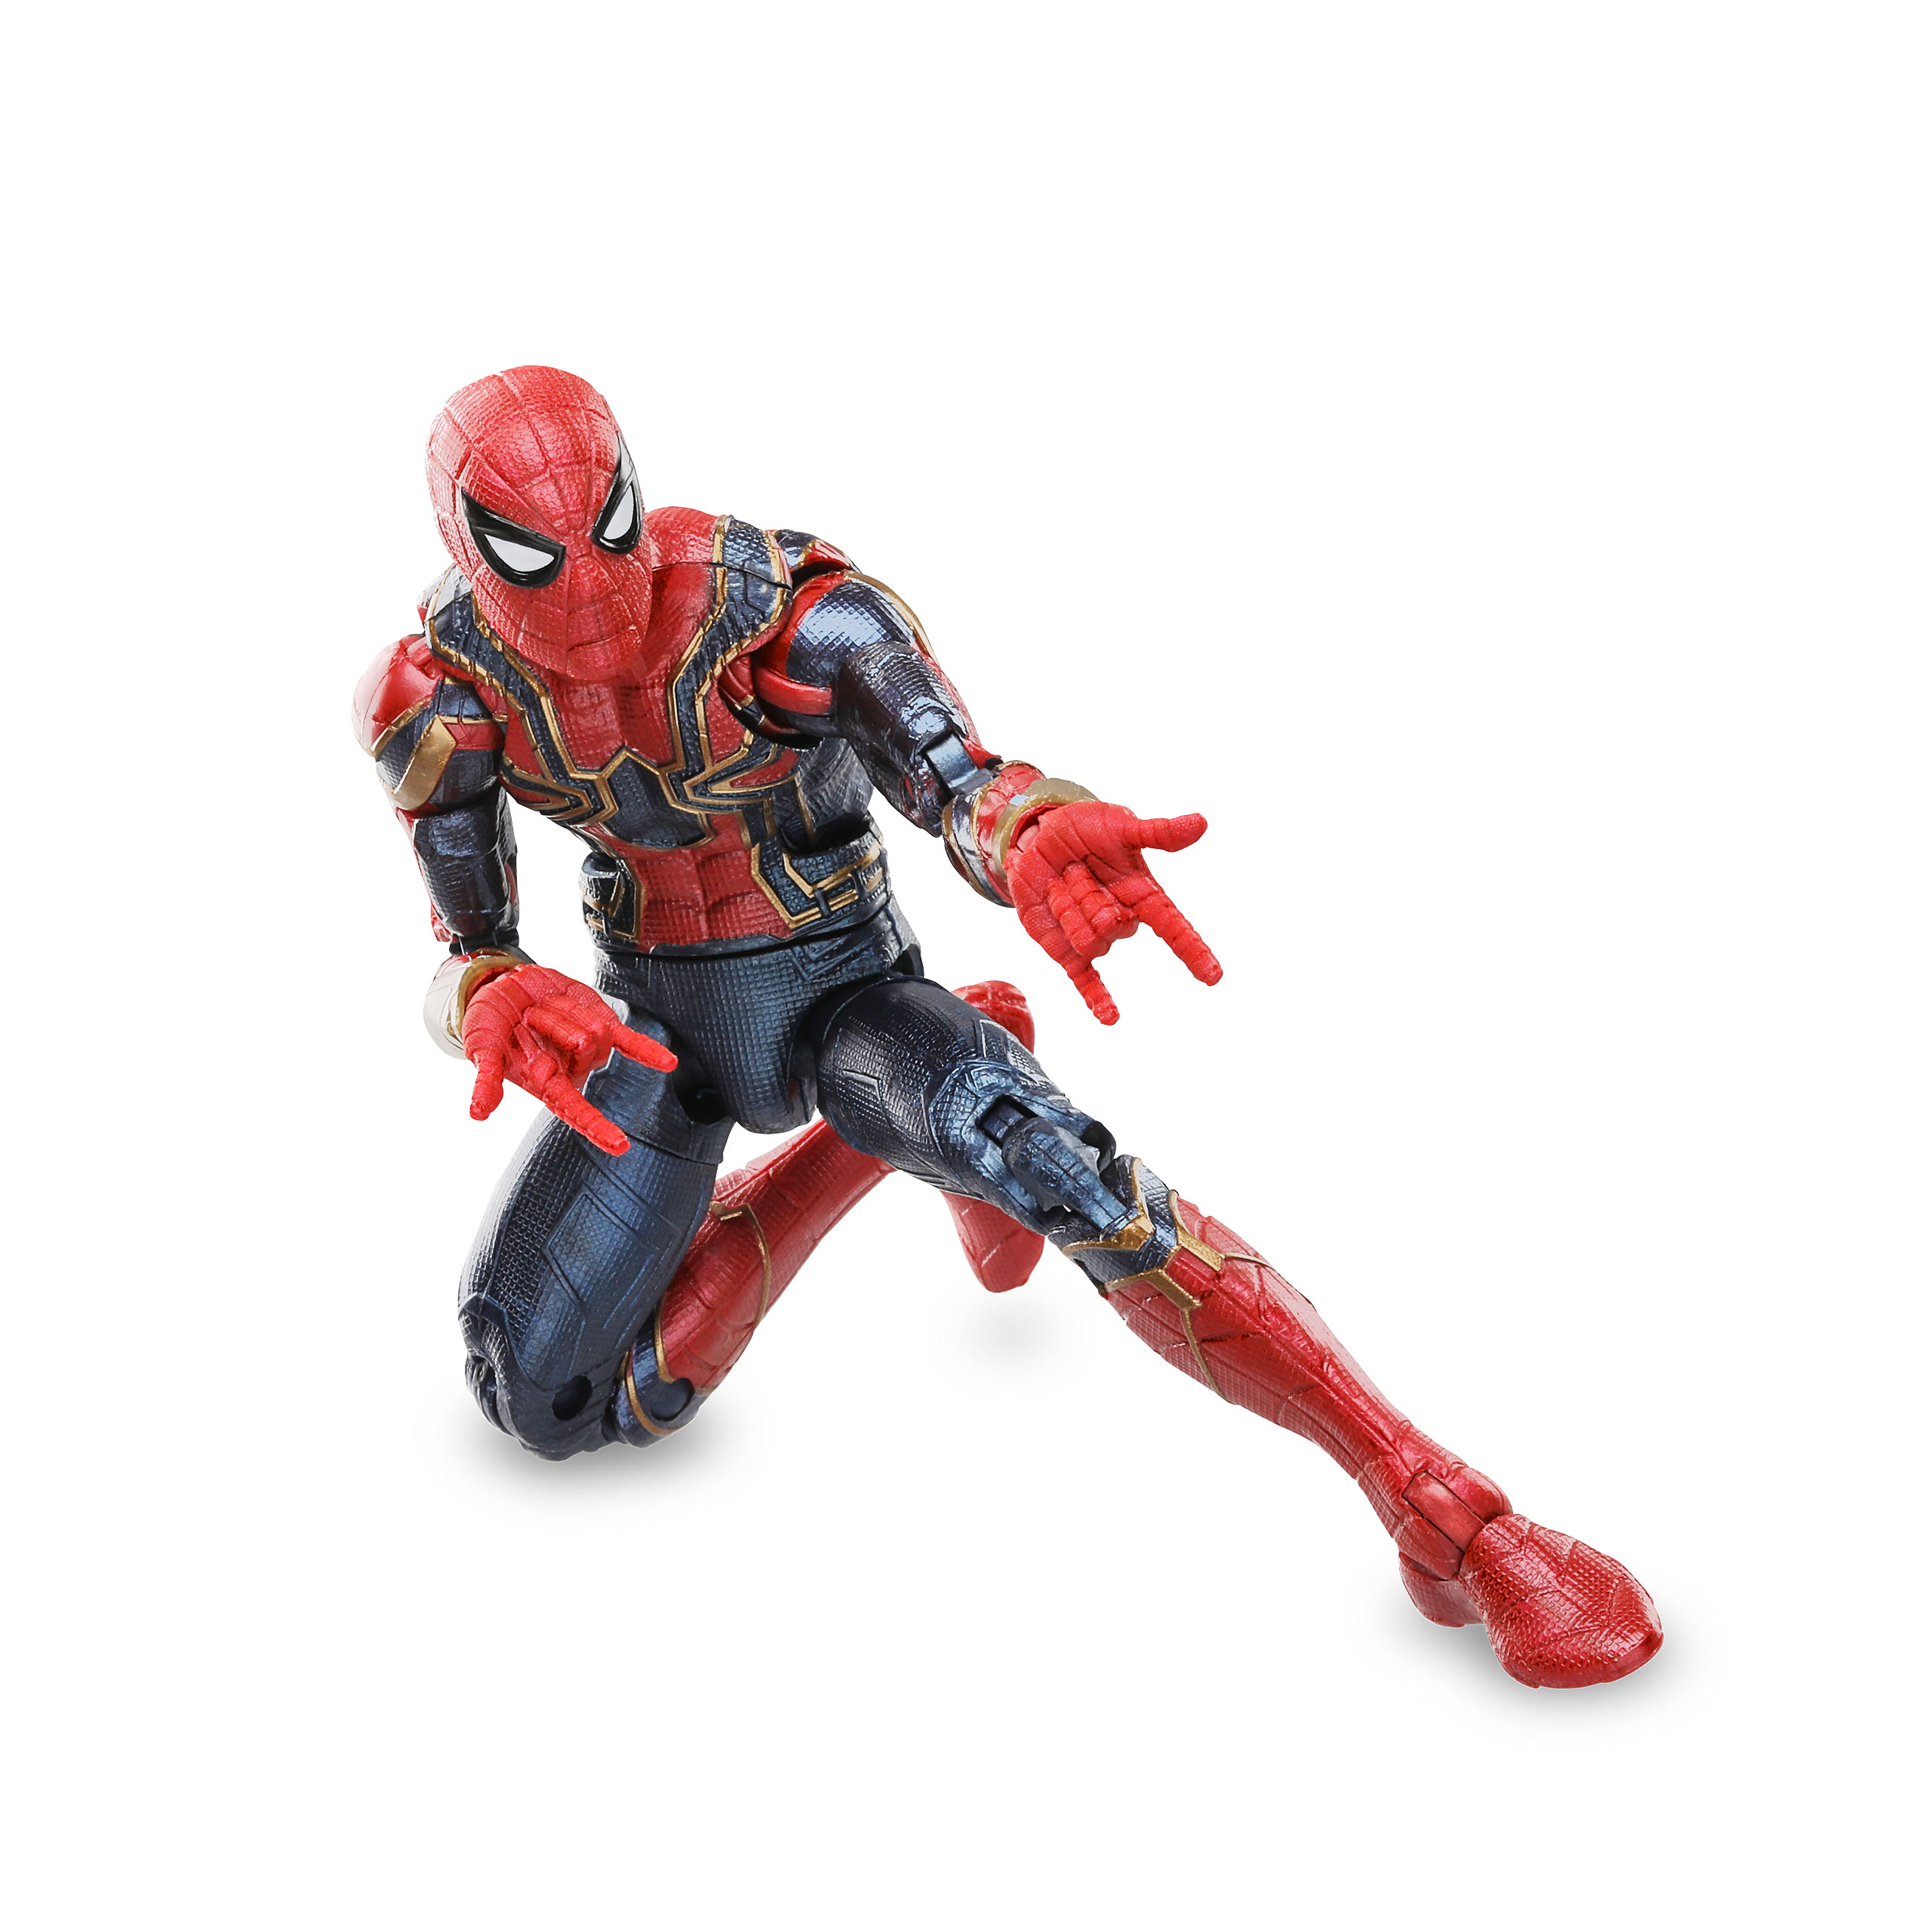 Spider-Man - Marvel Legends Series Action Figure